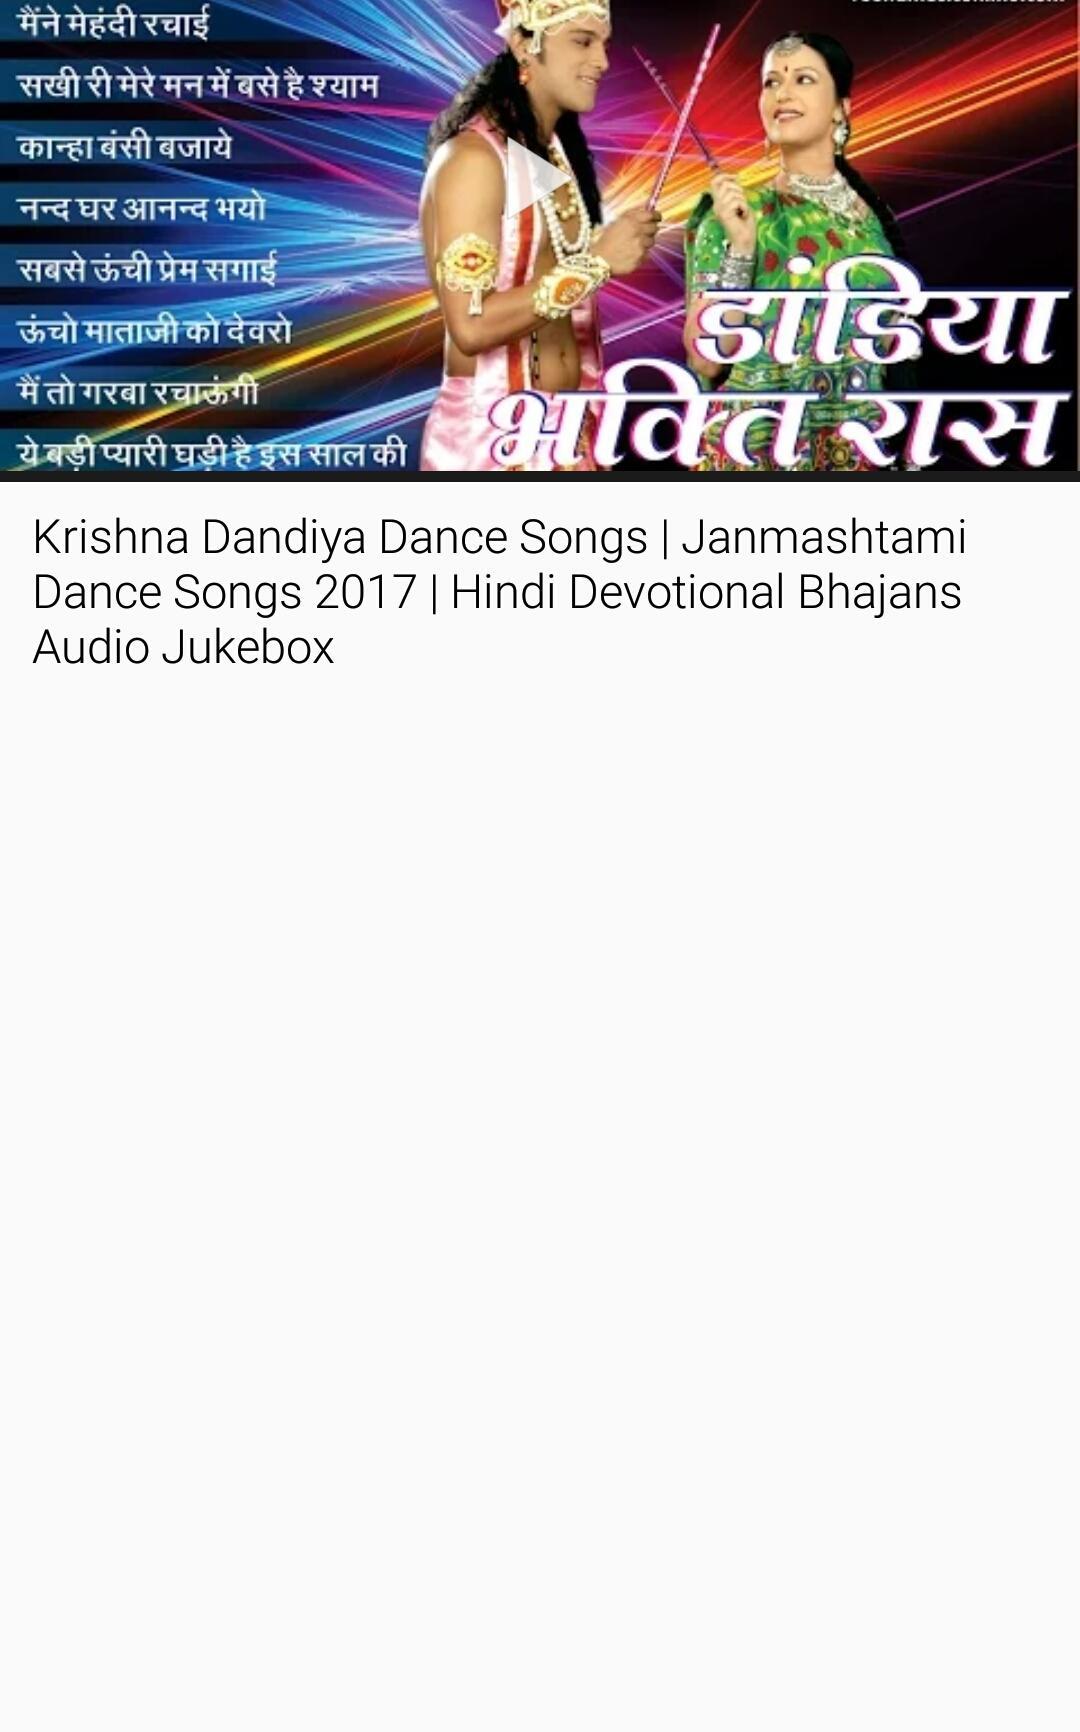 jai shree krishna serial songs ringtone download